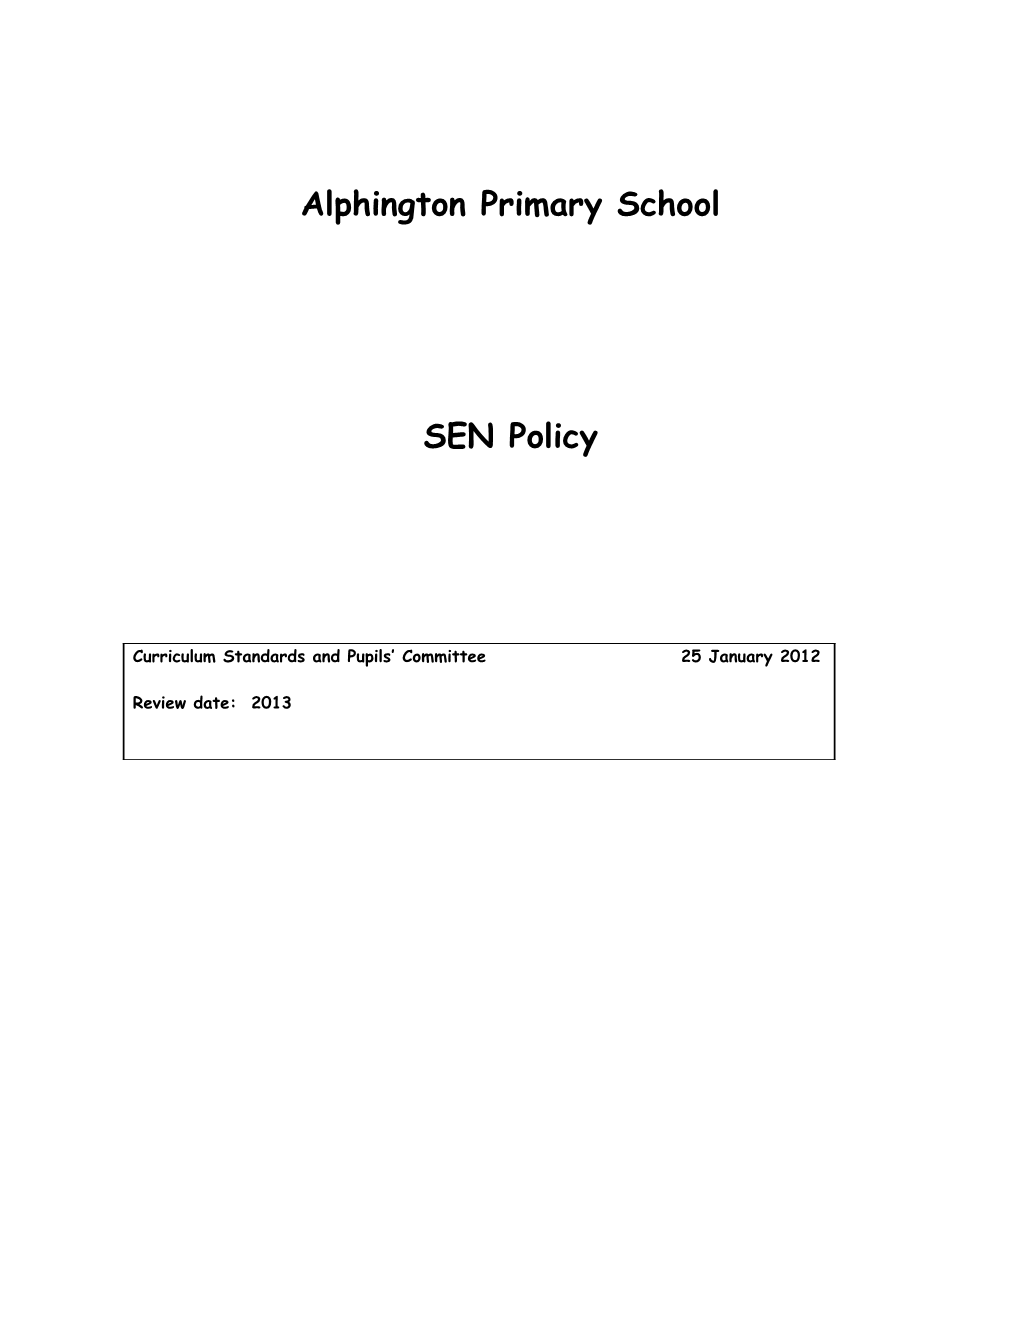 Sample SEN Policy for Devon Schools